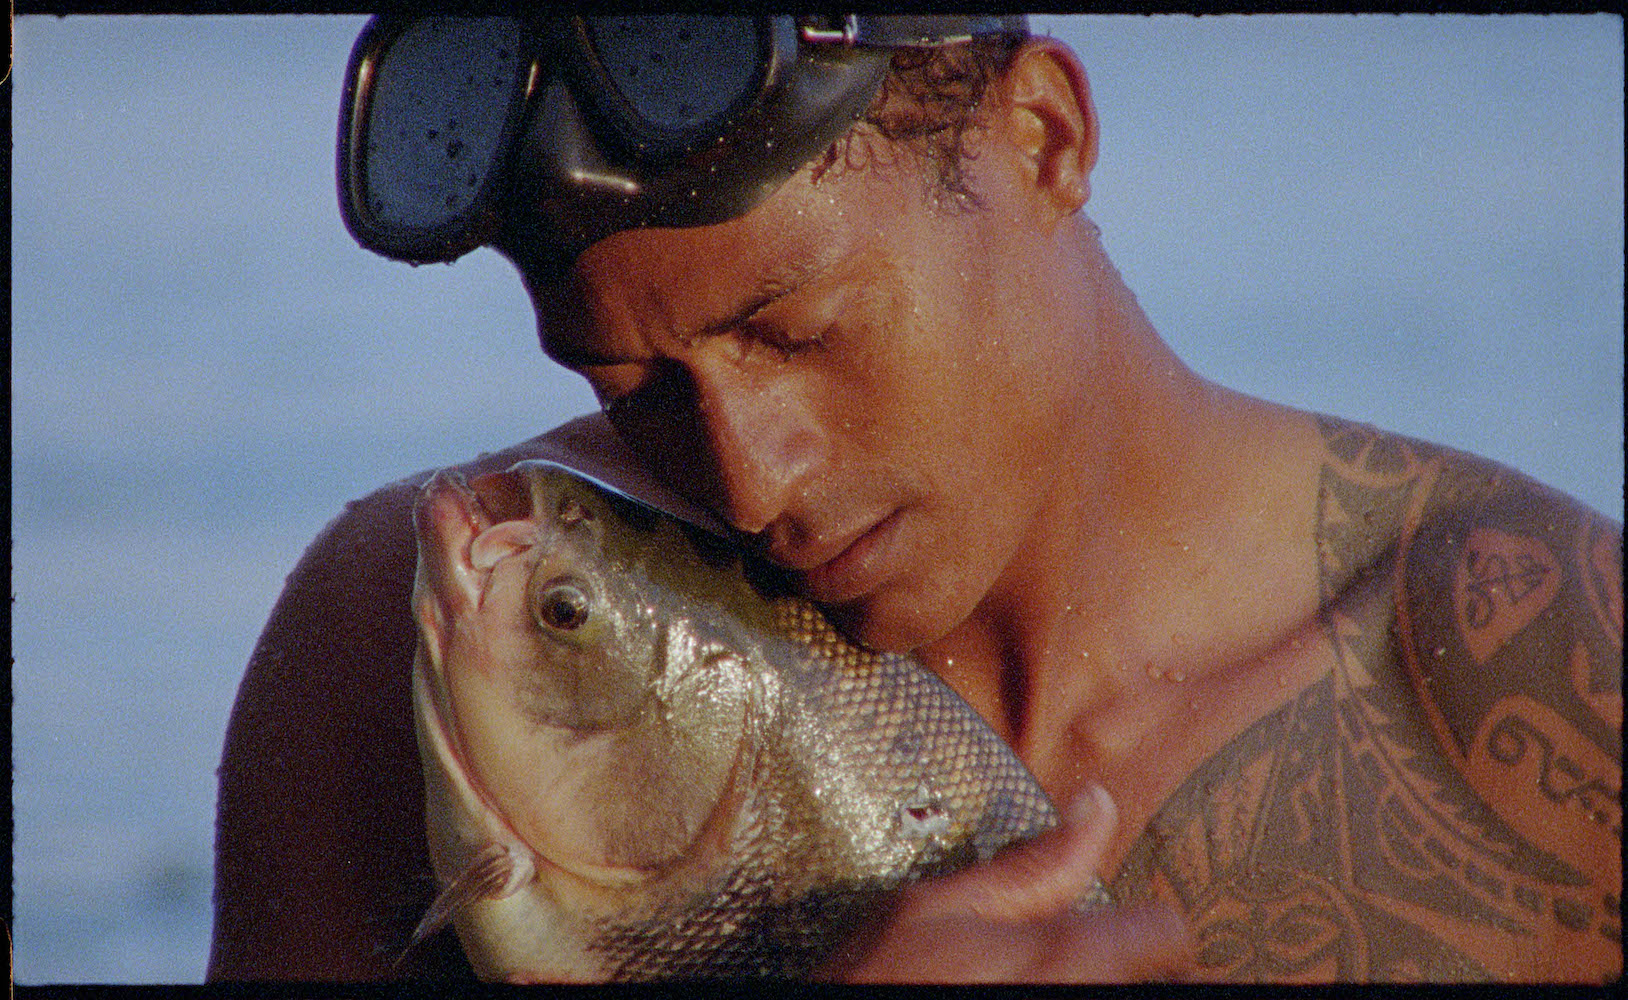 Jonathas de Andrade, "O Peixe (The Fish)", Video Still, 2016